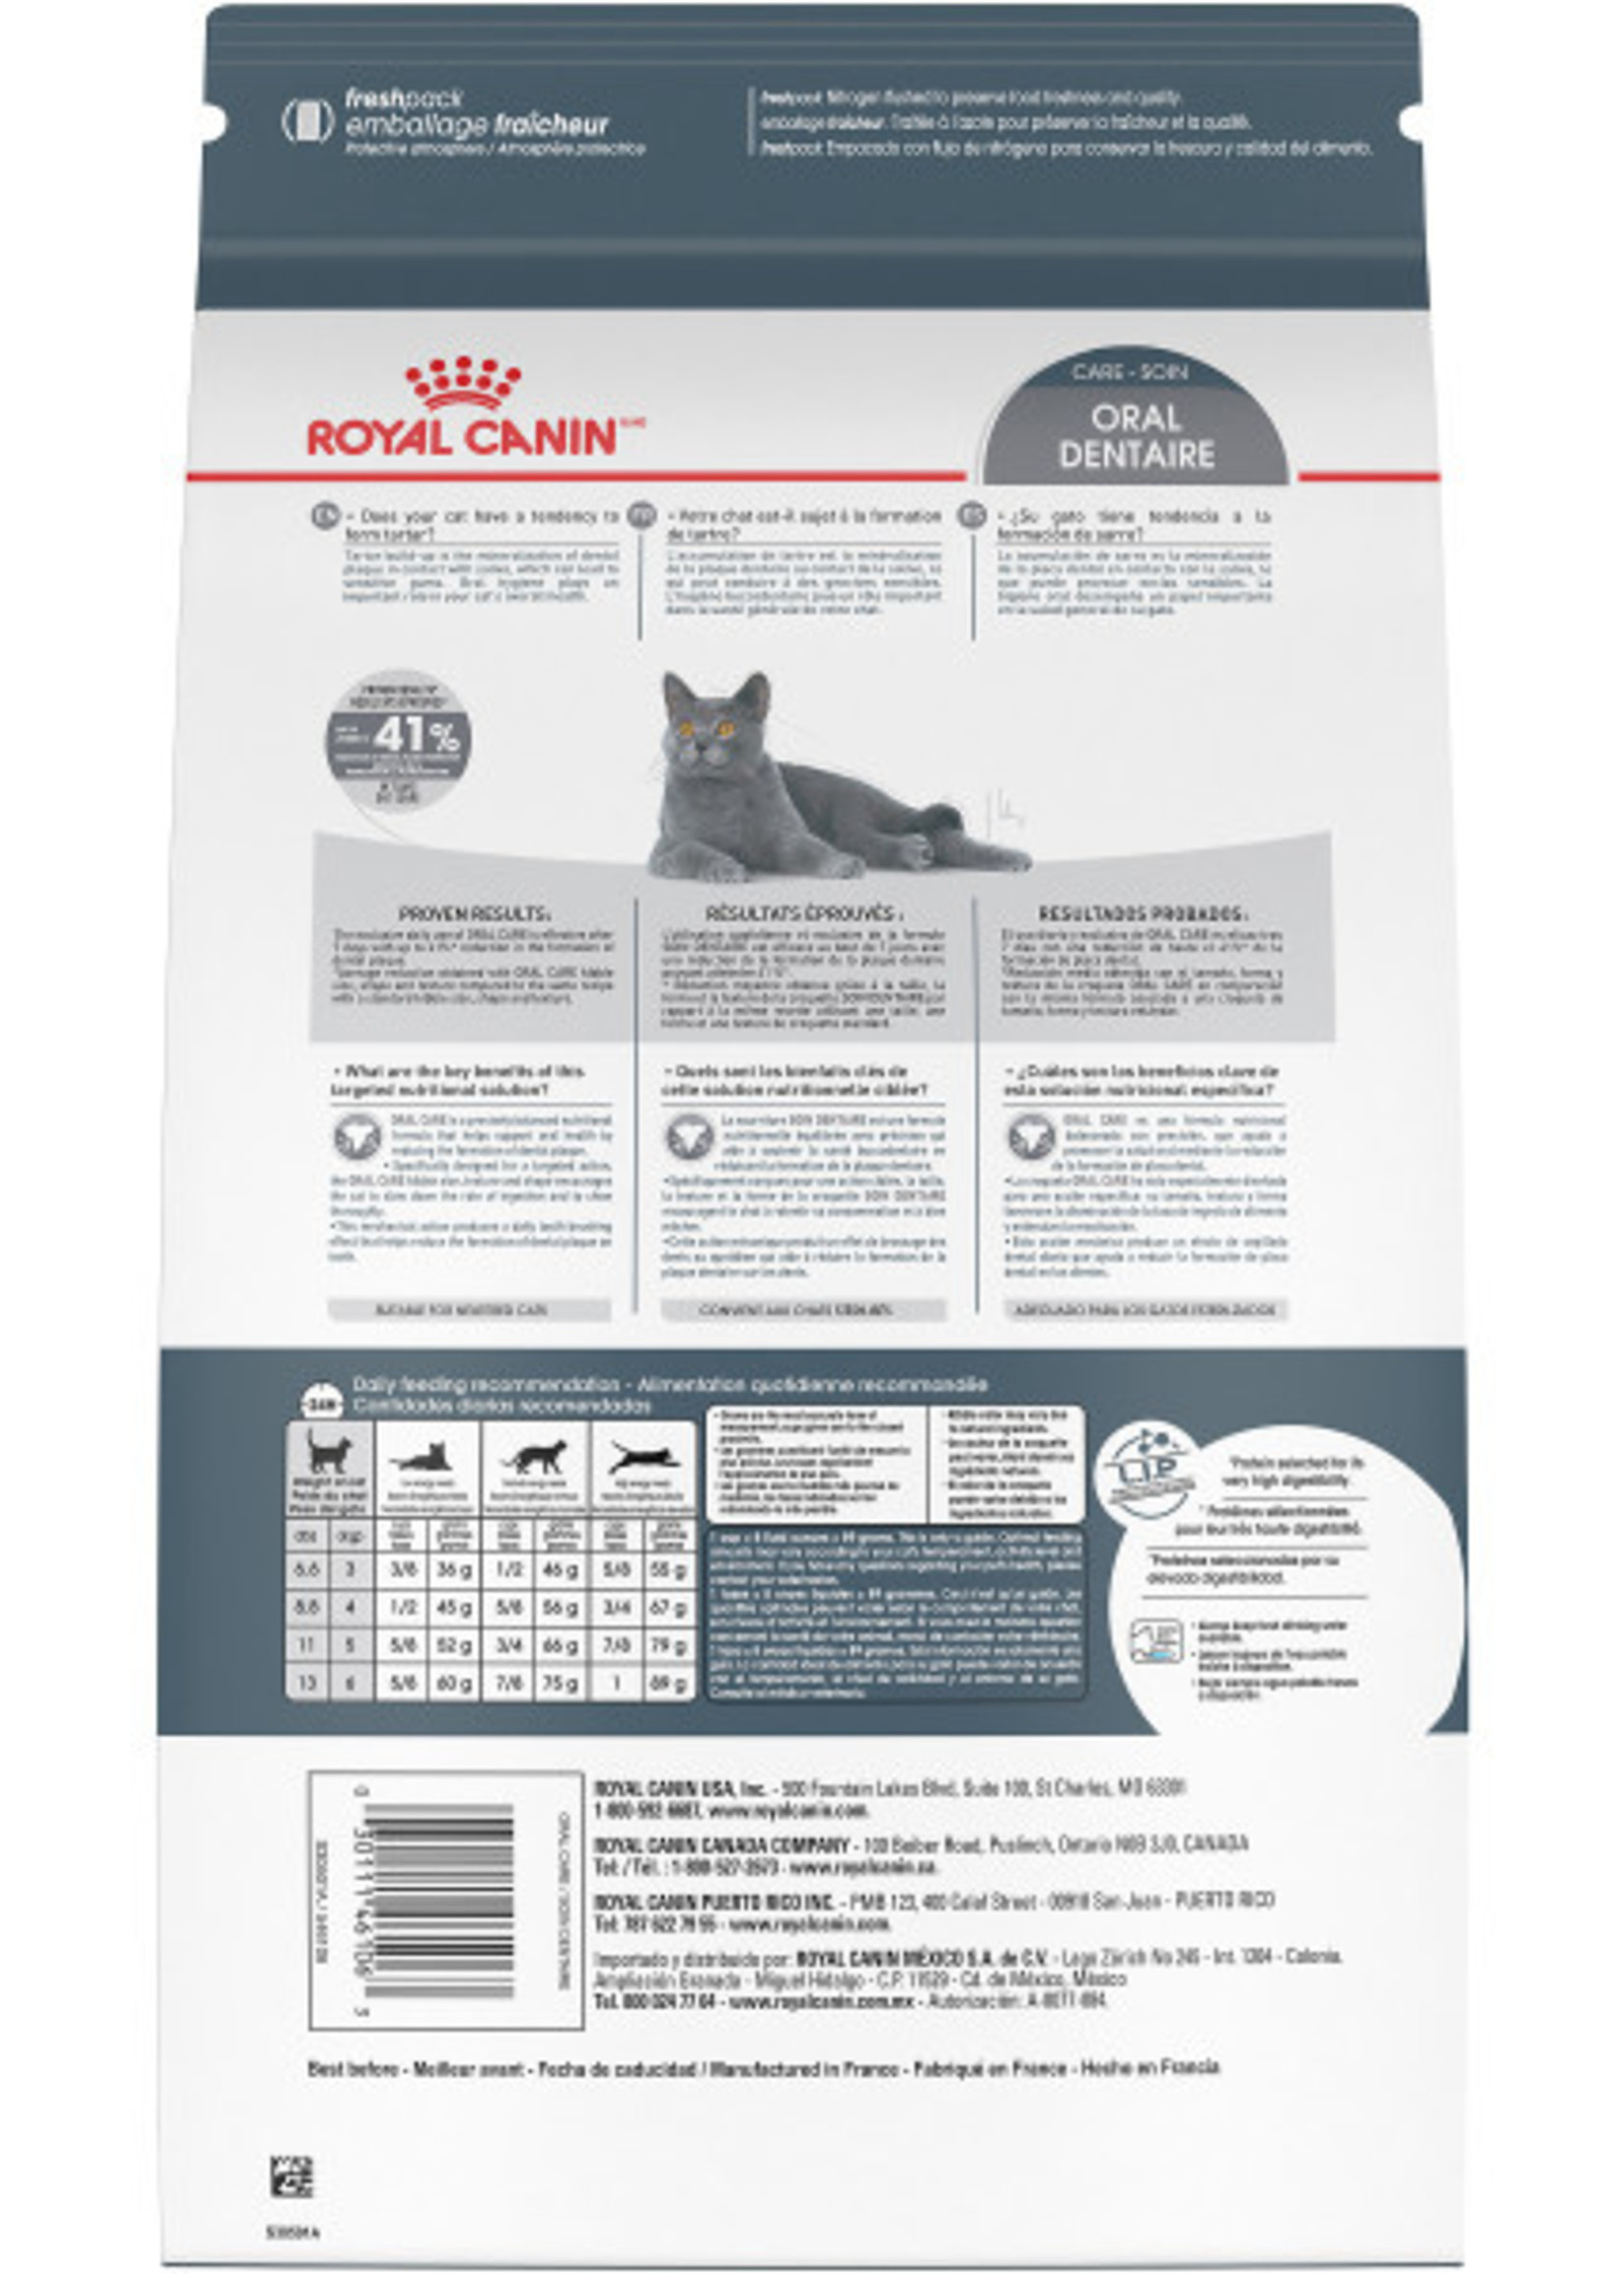 Royal Canin® Royal Canin Cat Oral Care 6lb